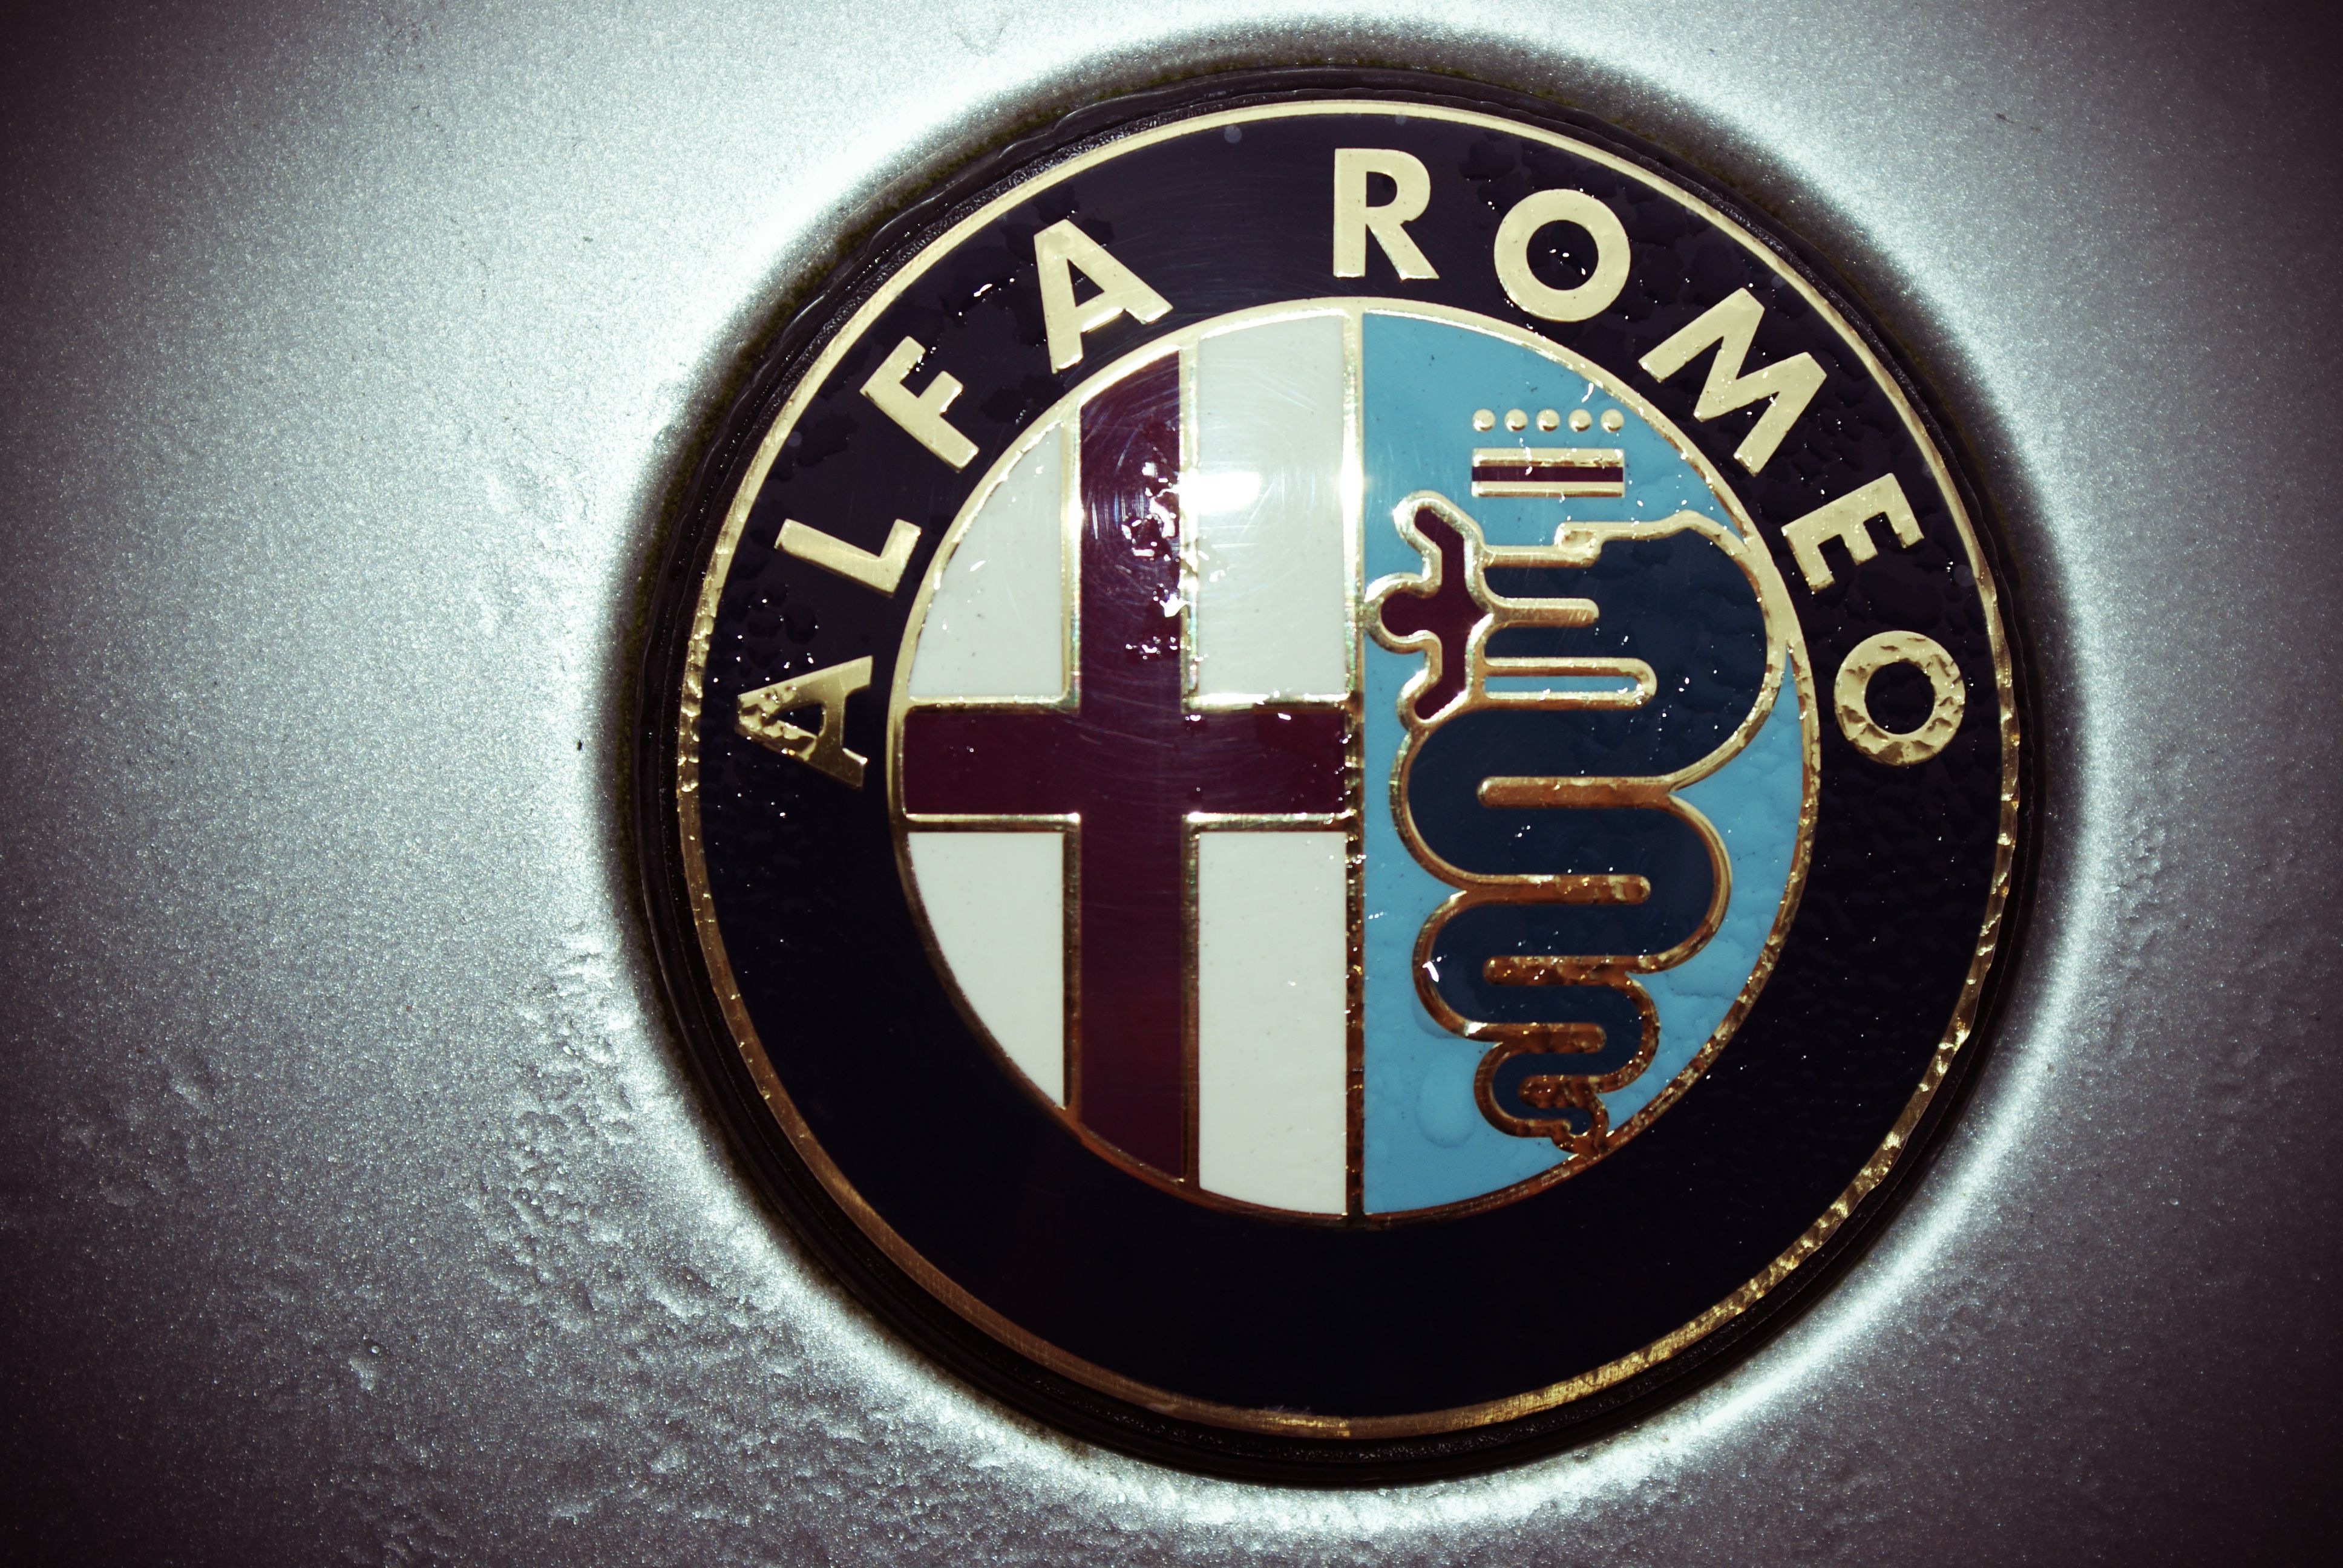 alfa romeo logo wallpaper